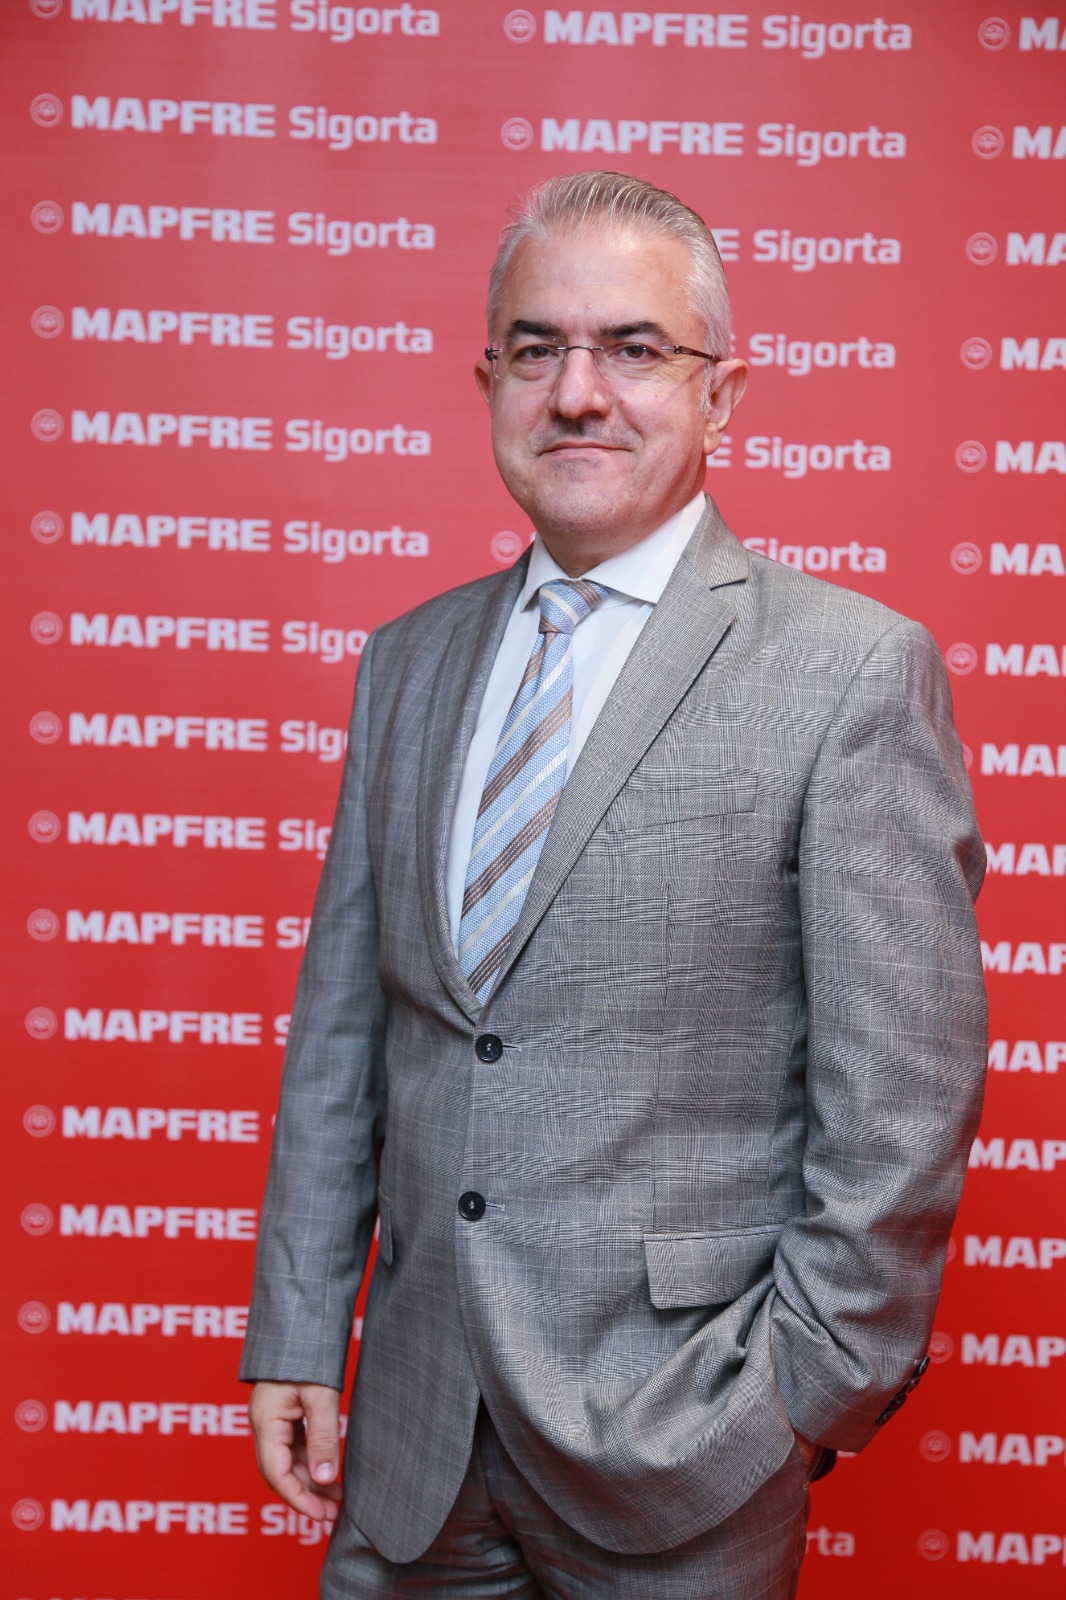 Mapfre Sigorta’ya yeni CEO